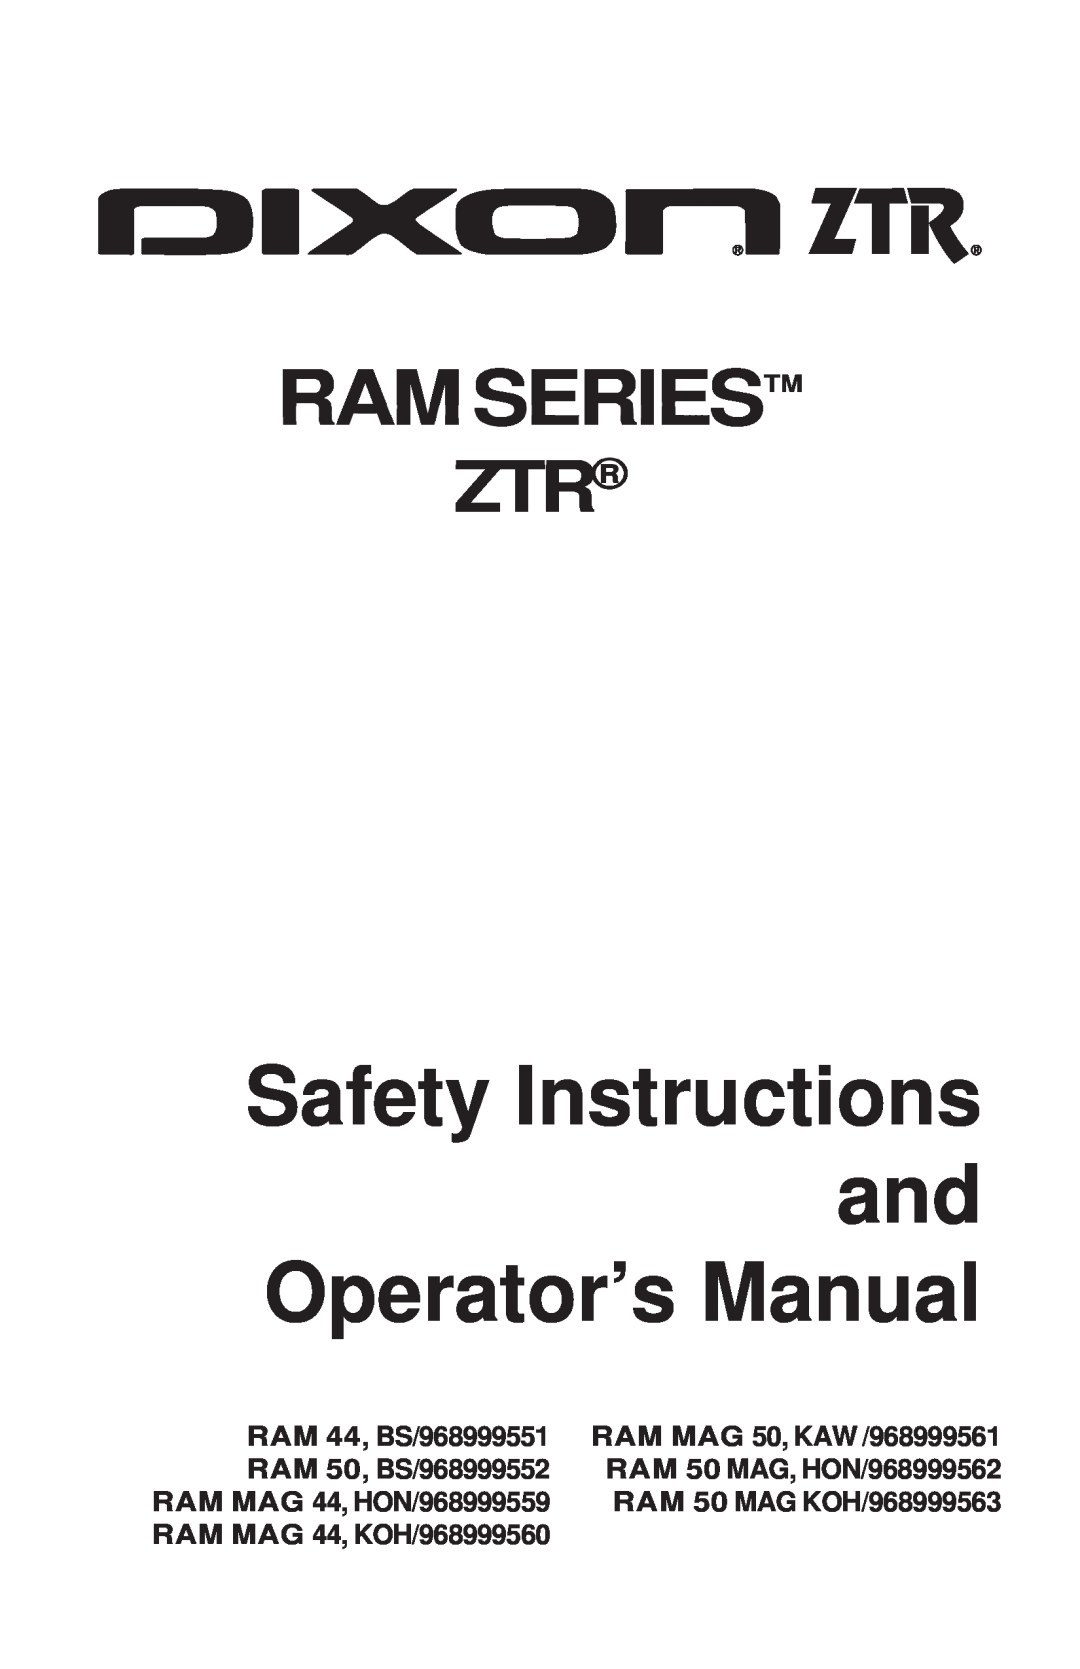 Dixon RAM 44, BS, BS, HON, KOH, KAW, HON manual Safety Instructions and Operator’s Manual, Ram Series 